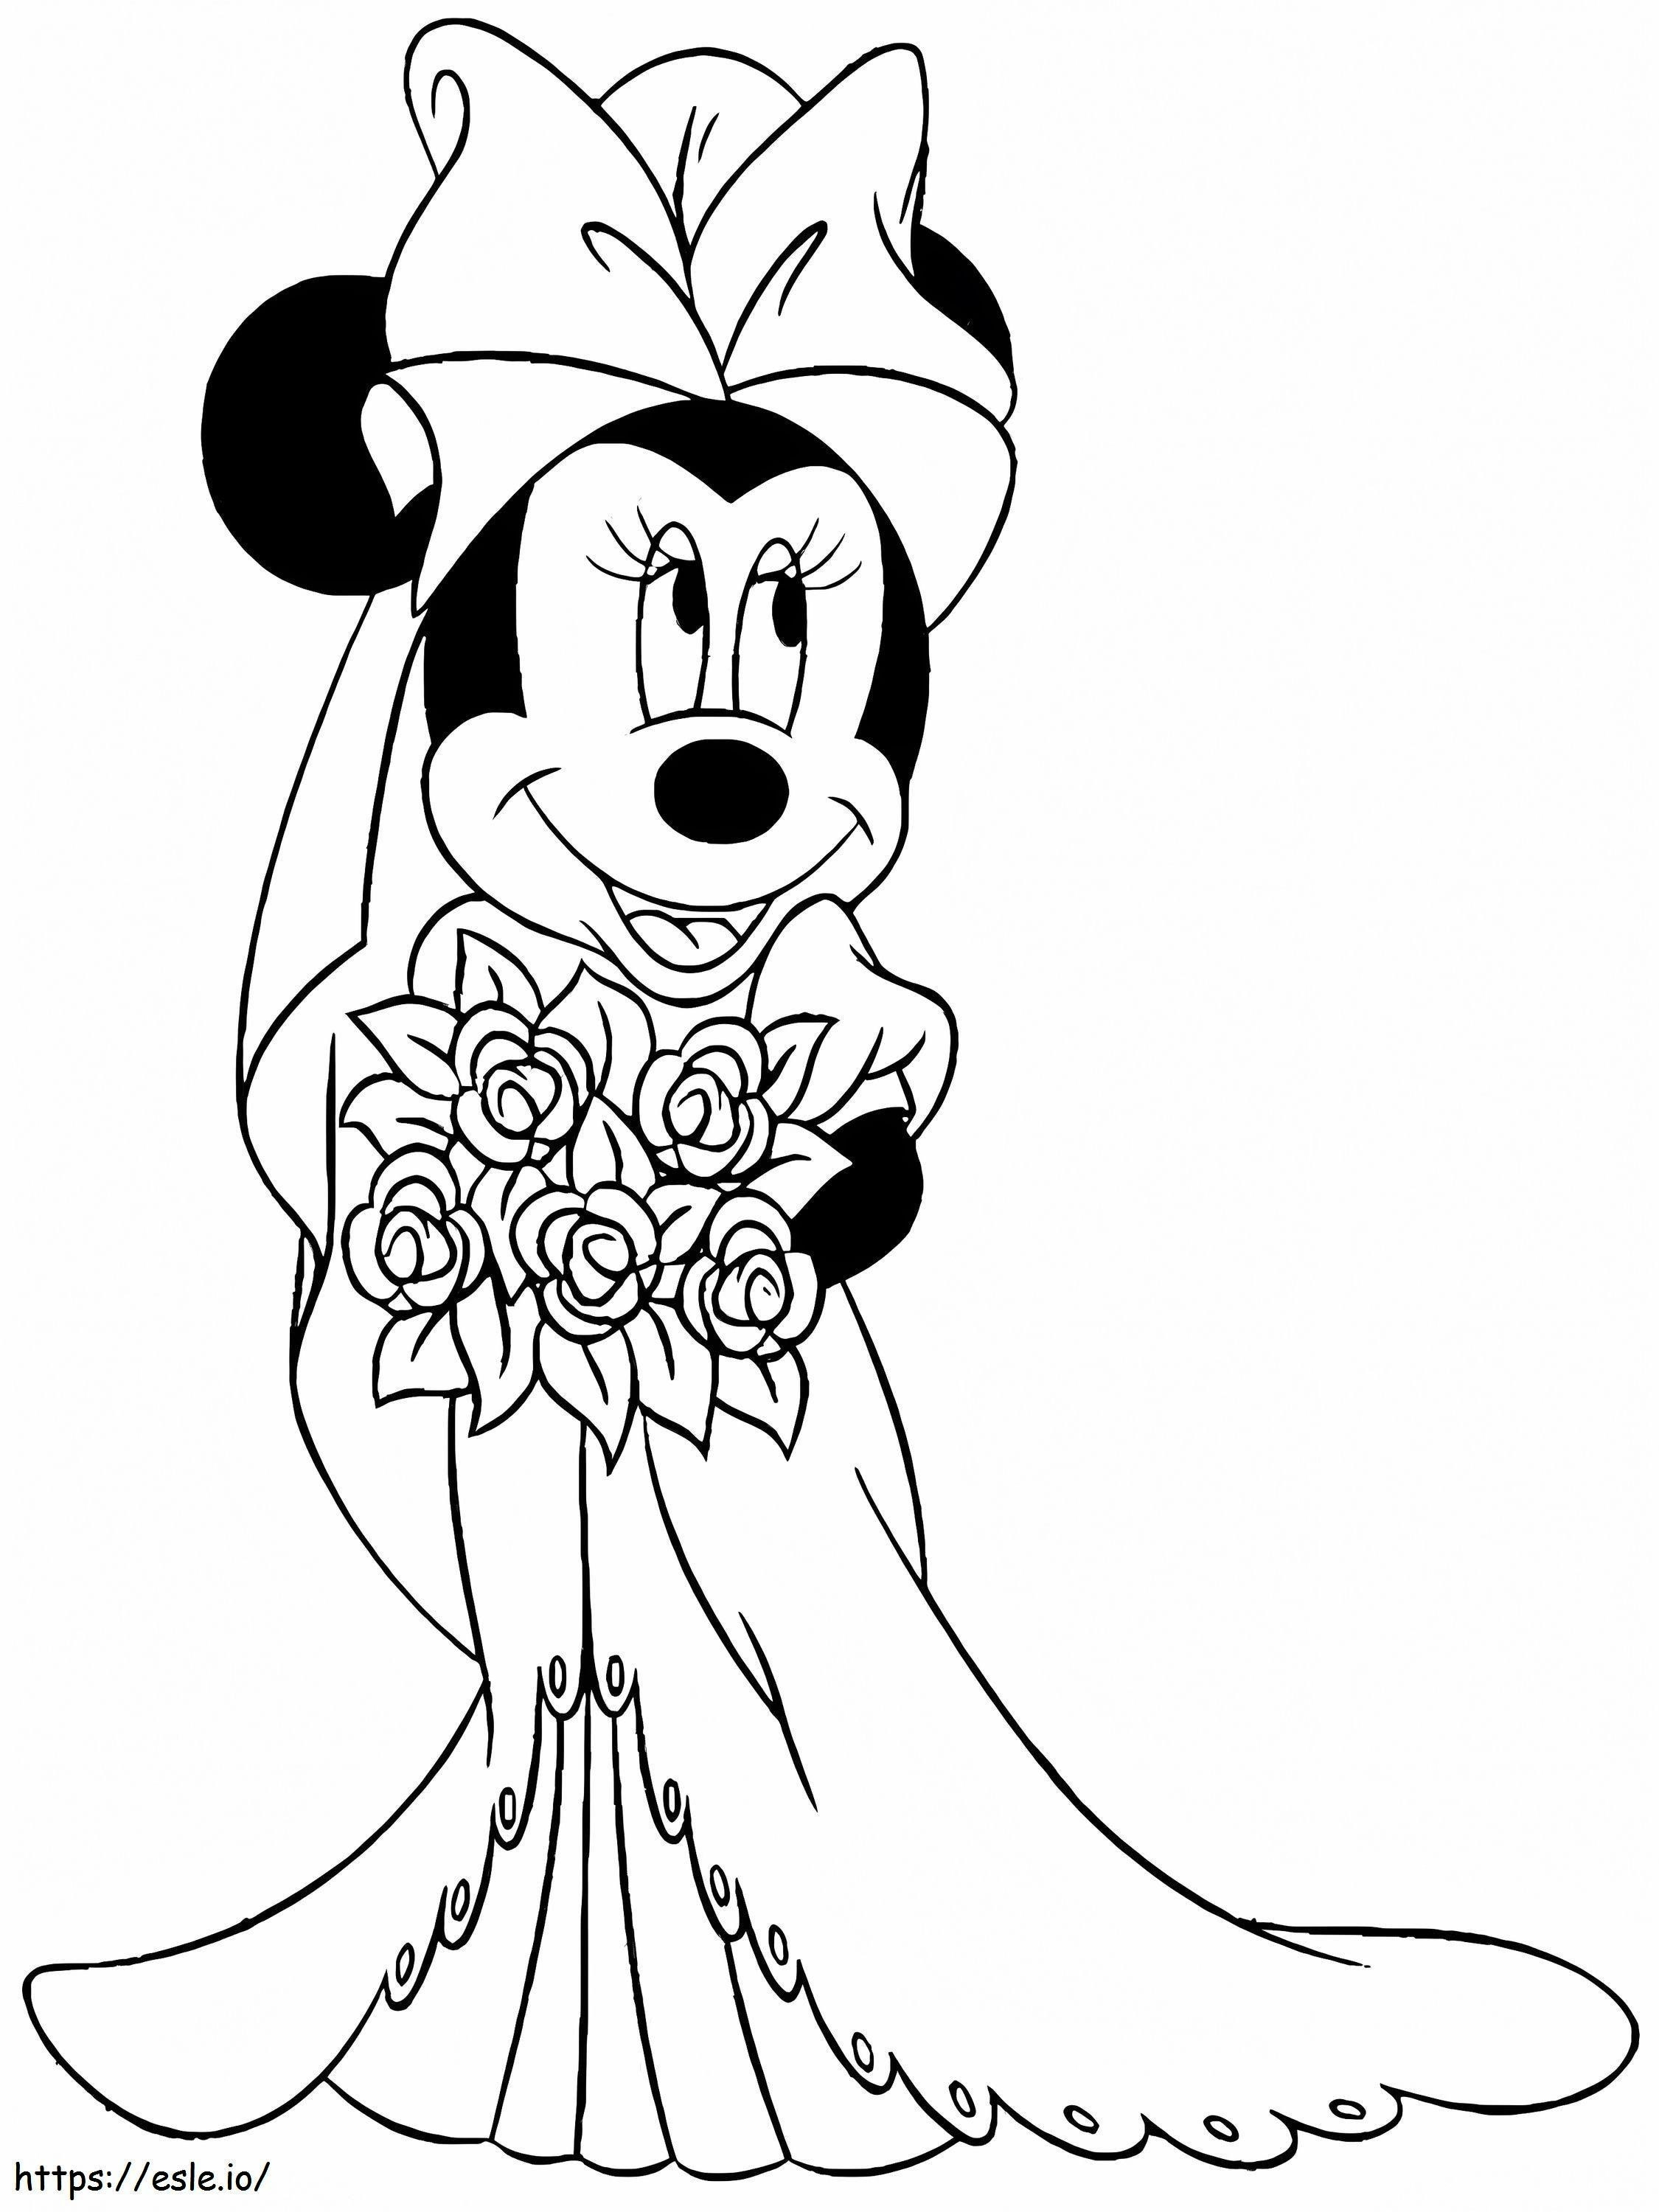 Minnie Mouse da noiva para colorir